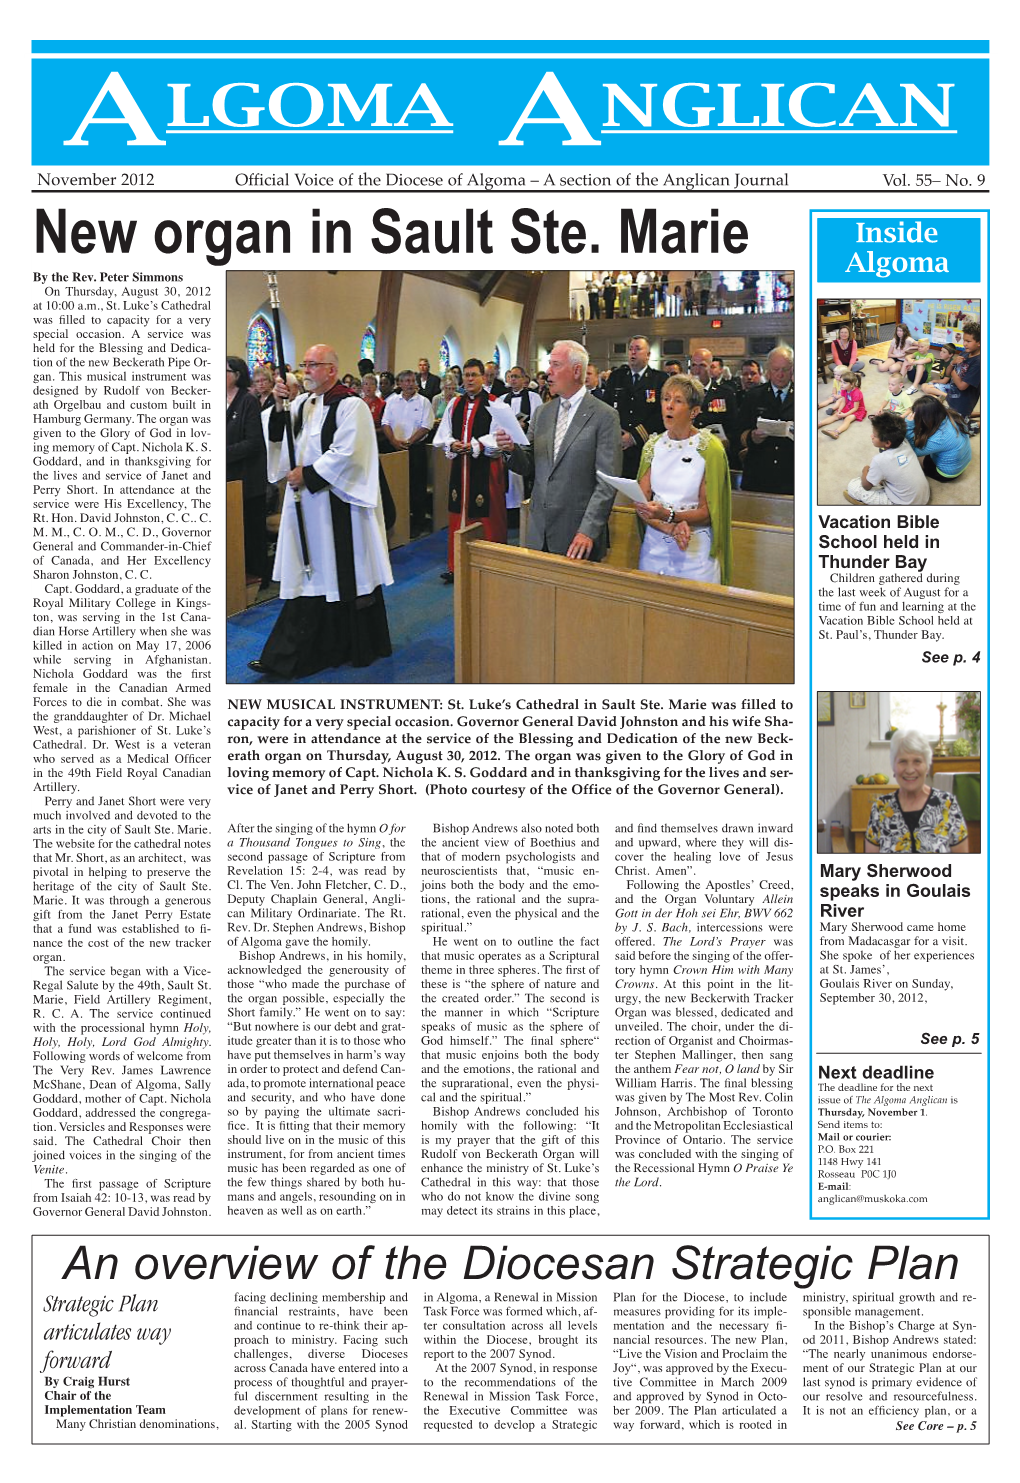 New Organ in Sault Ste. Marie Algoma by the Rev